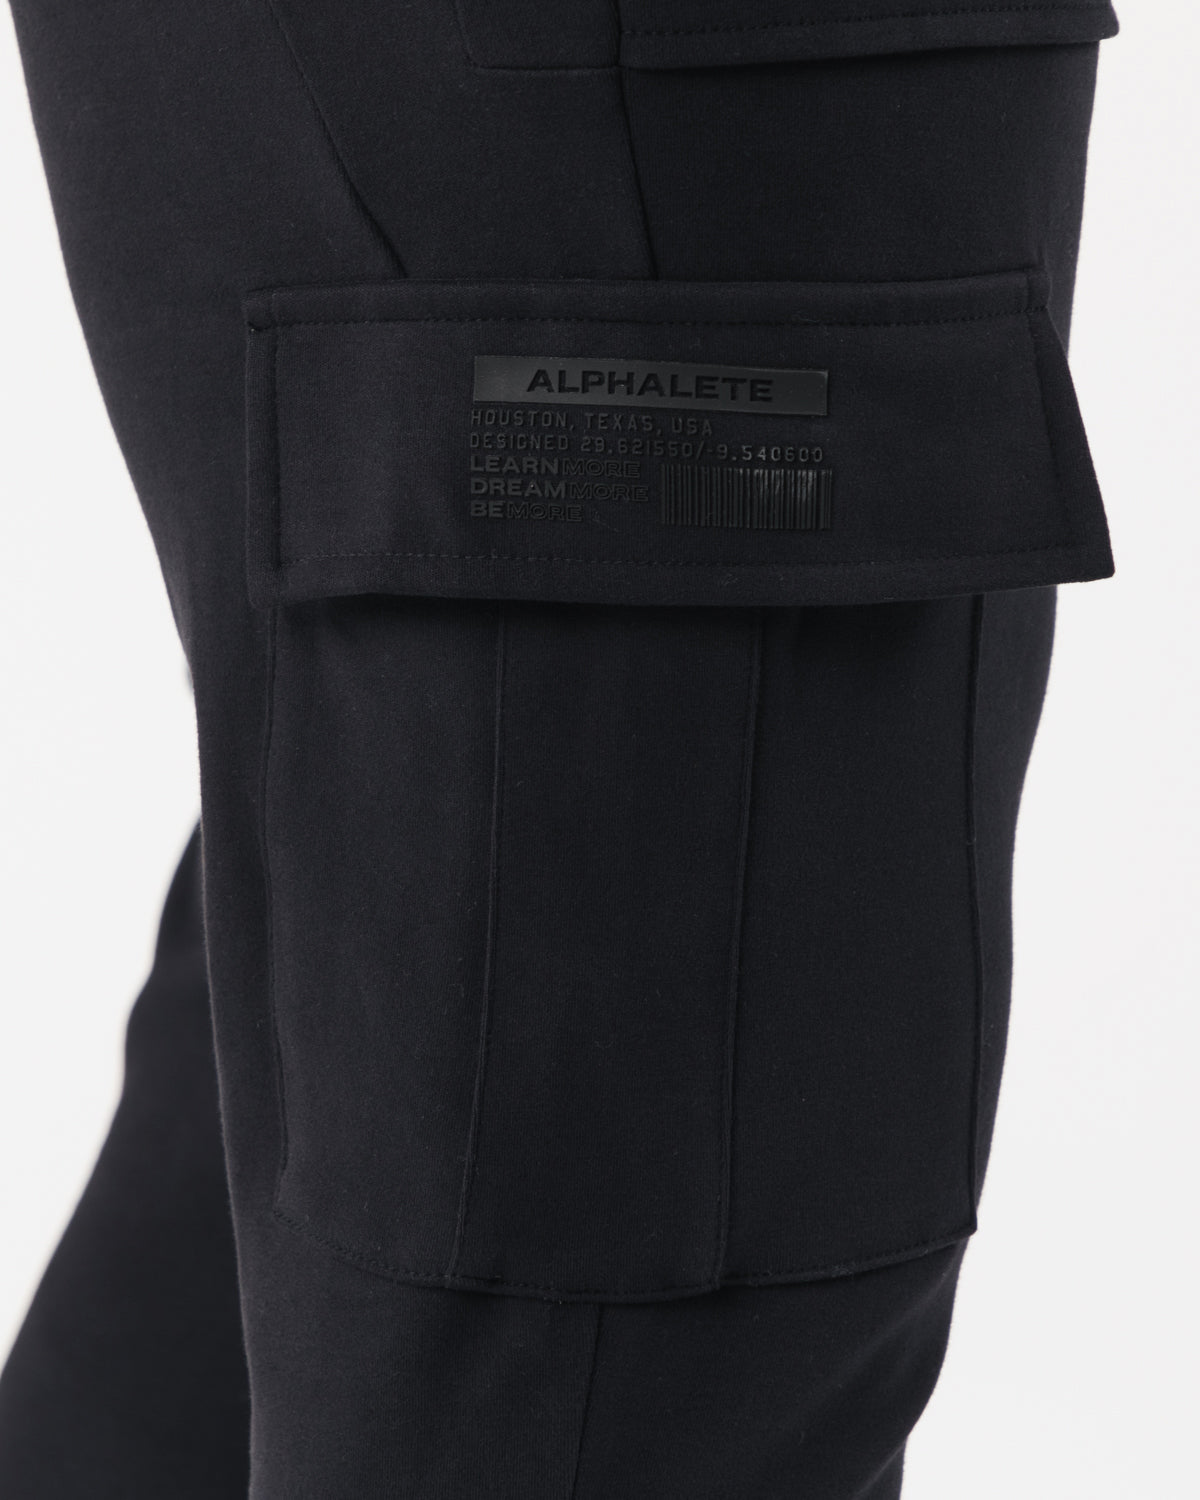 Alphalete Cargo Athletic Pants for Women